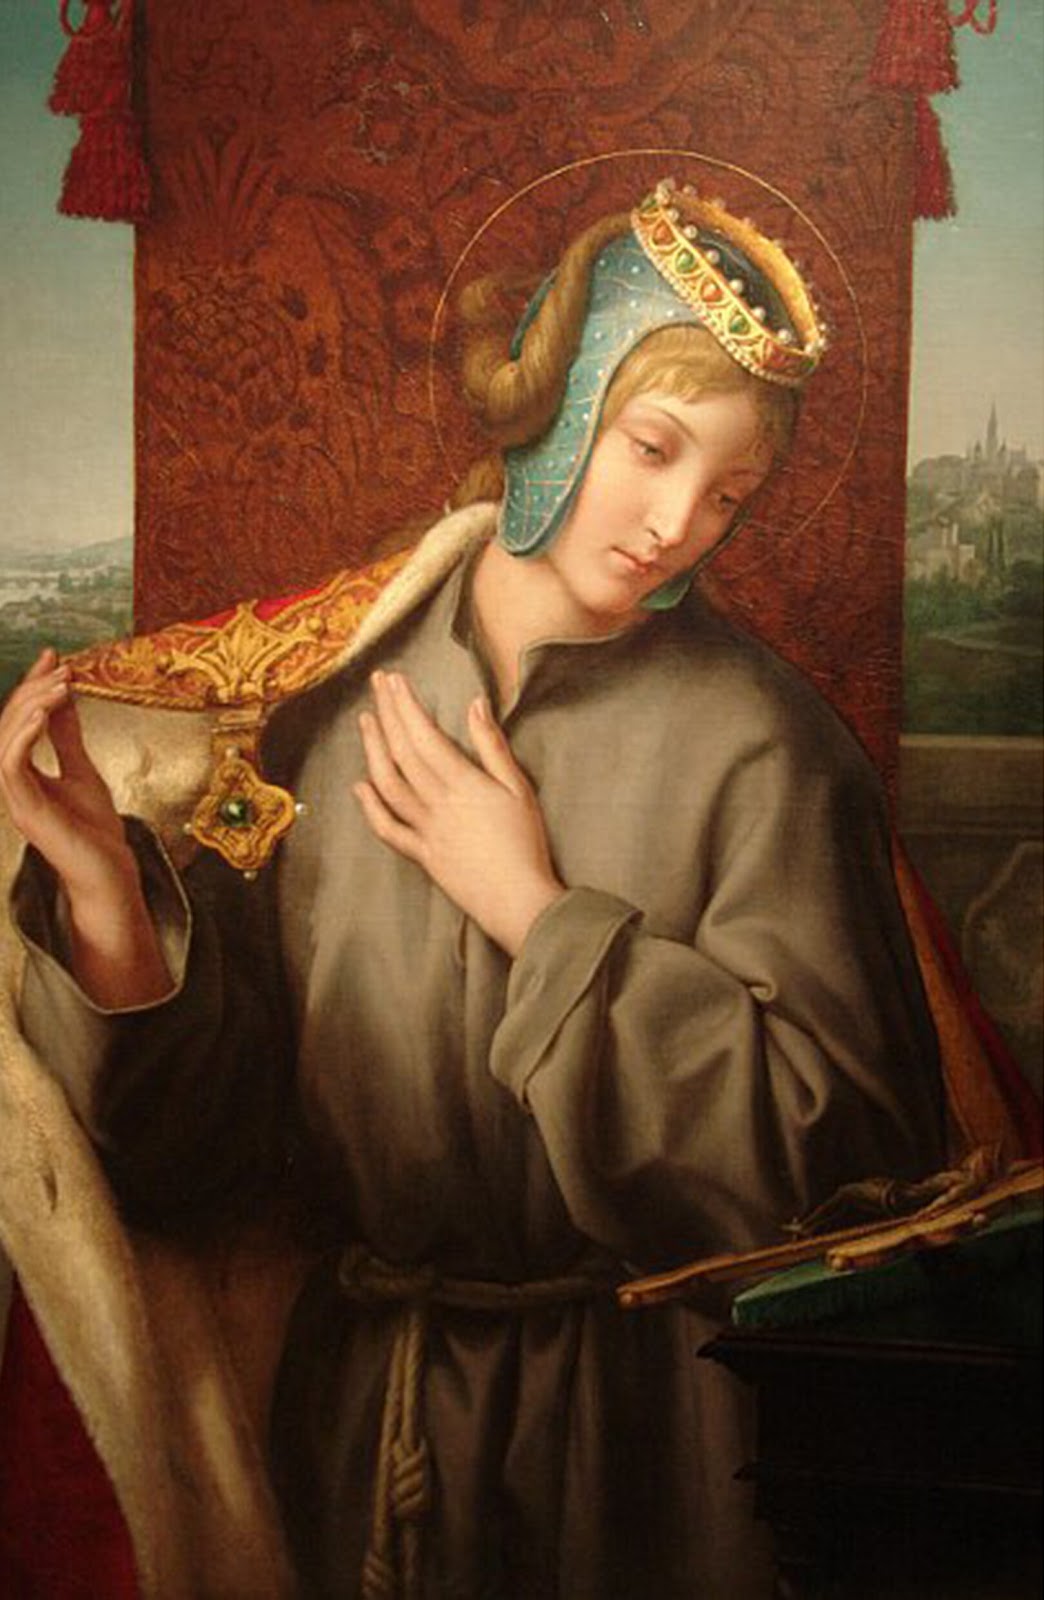 2 marzo, sant’Agnese di Boemia